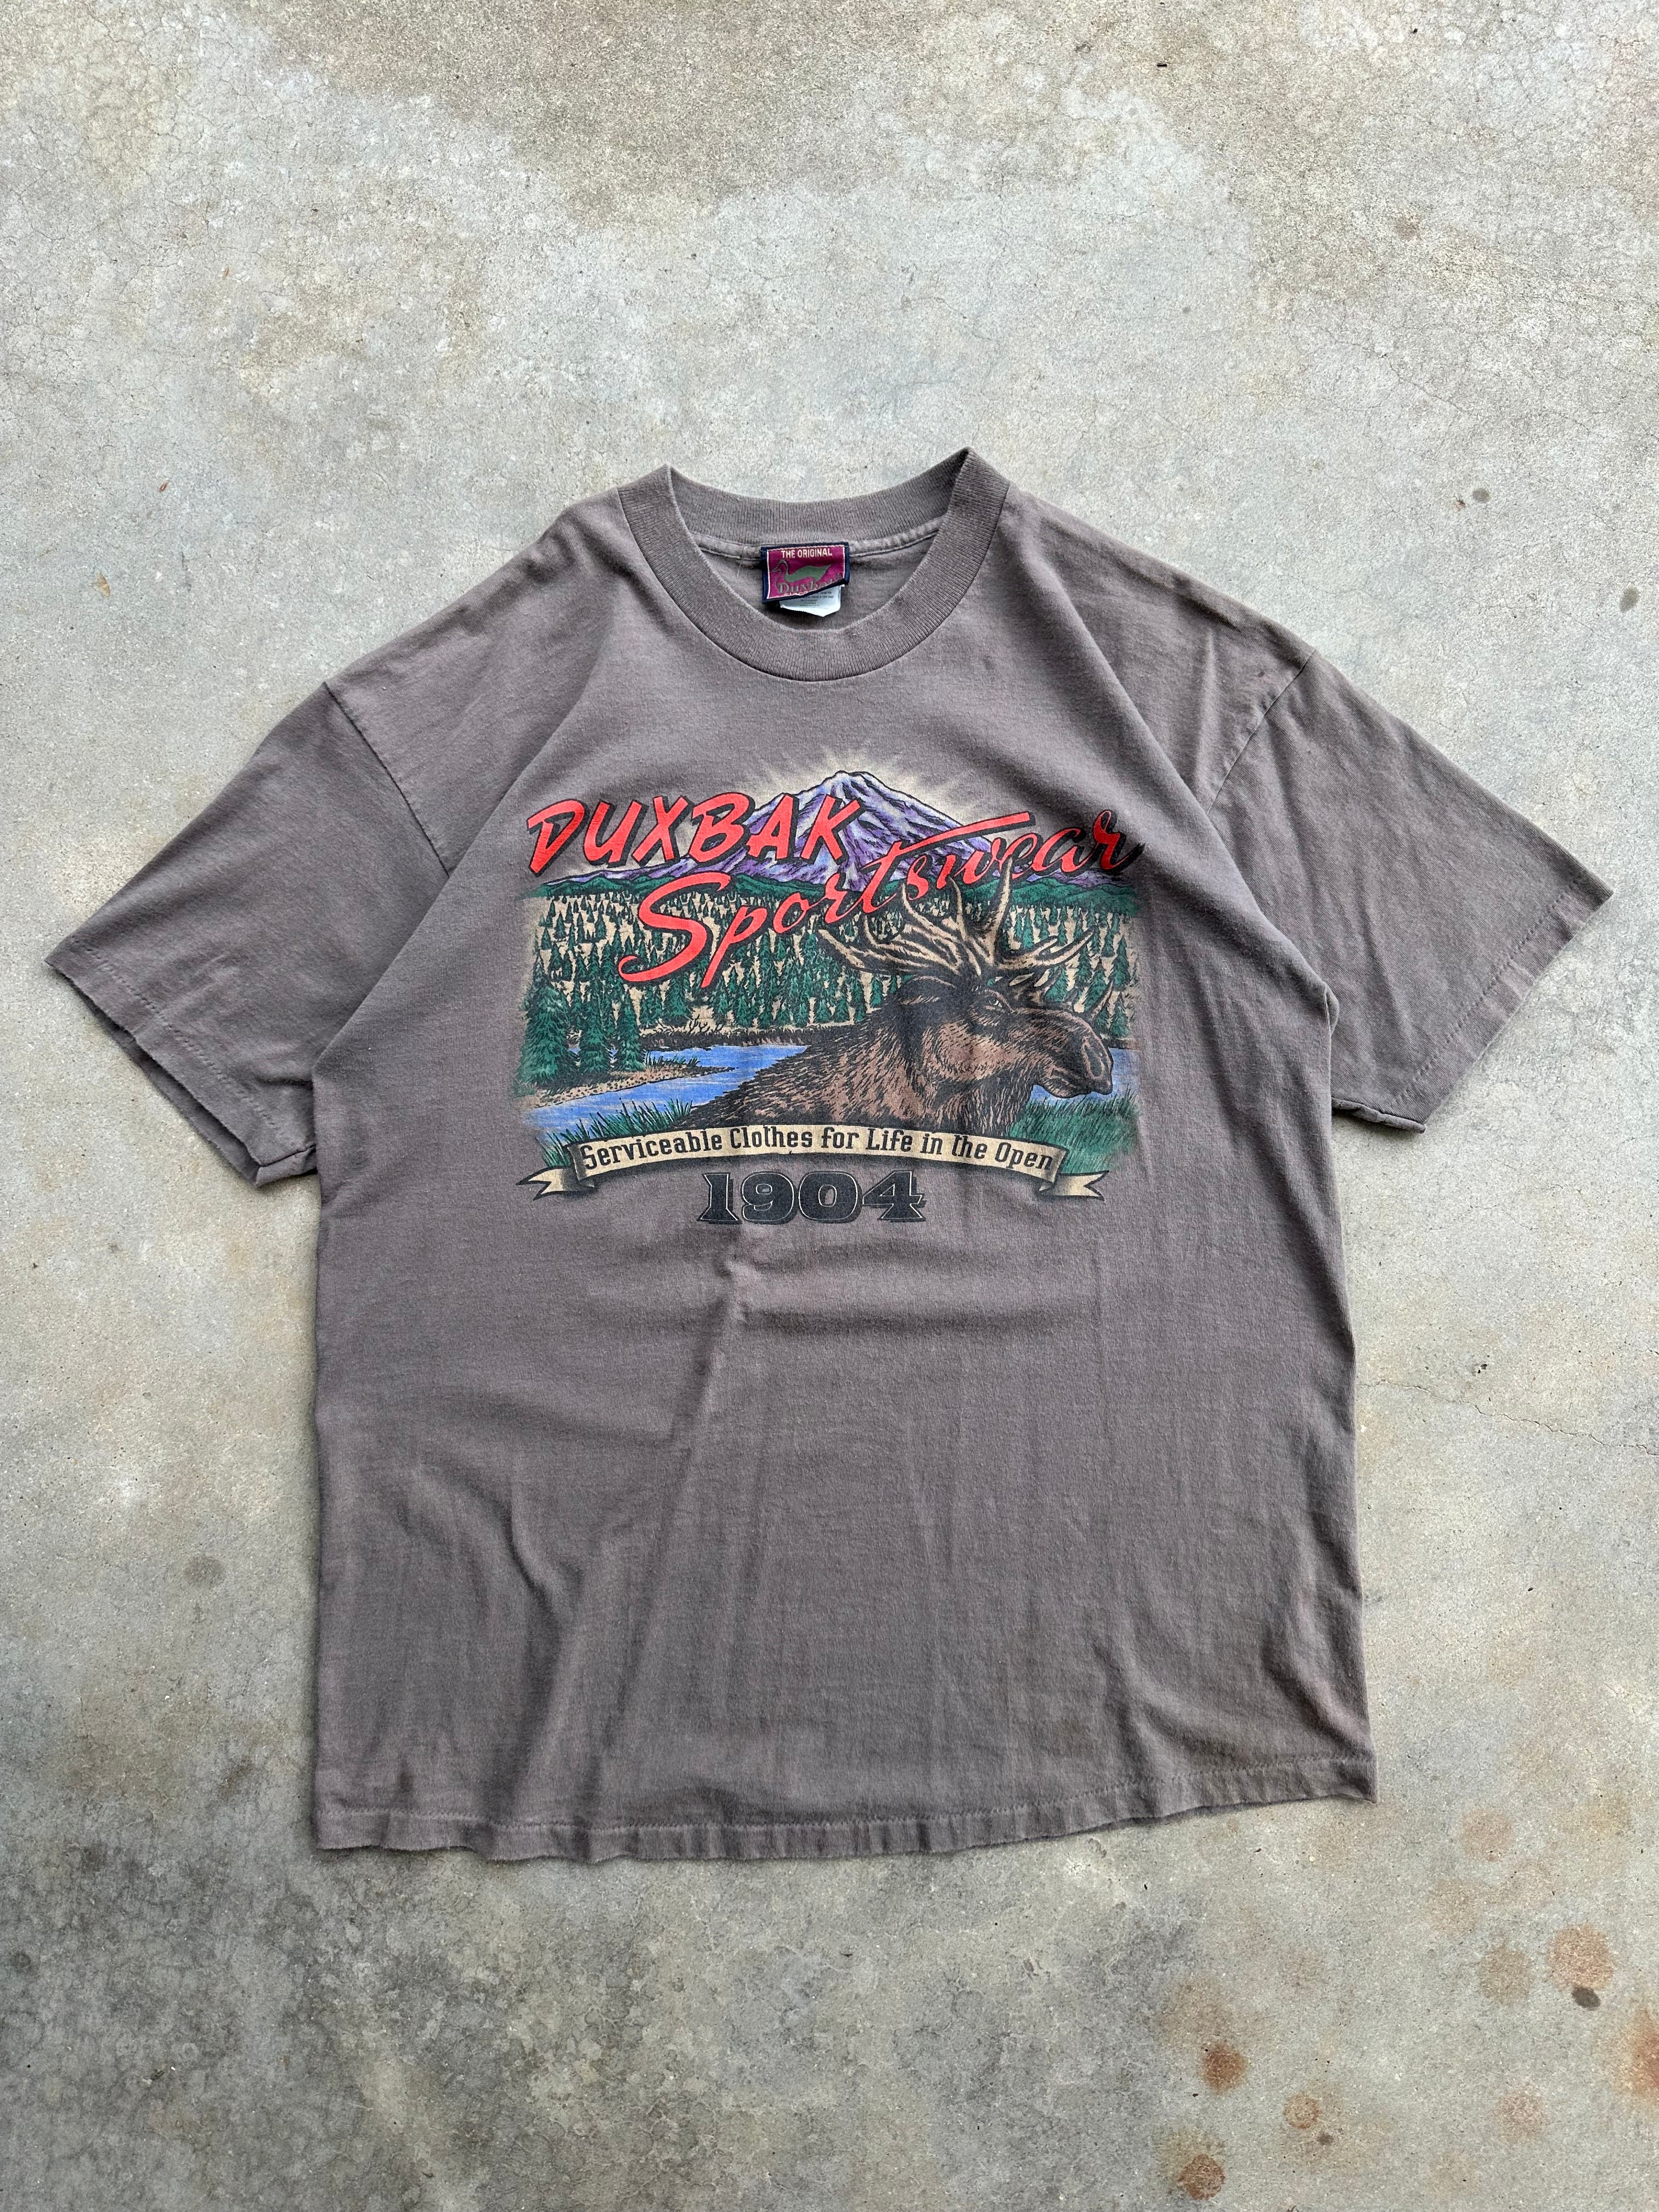 1990s Duxbak Sportsman Moose T-Shirt (XL)